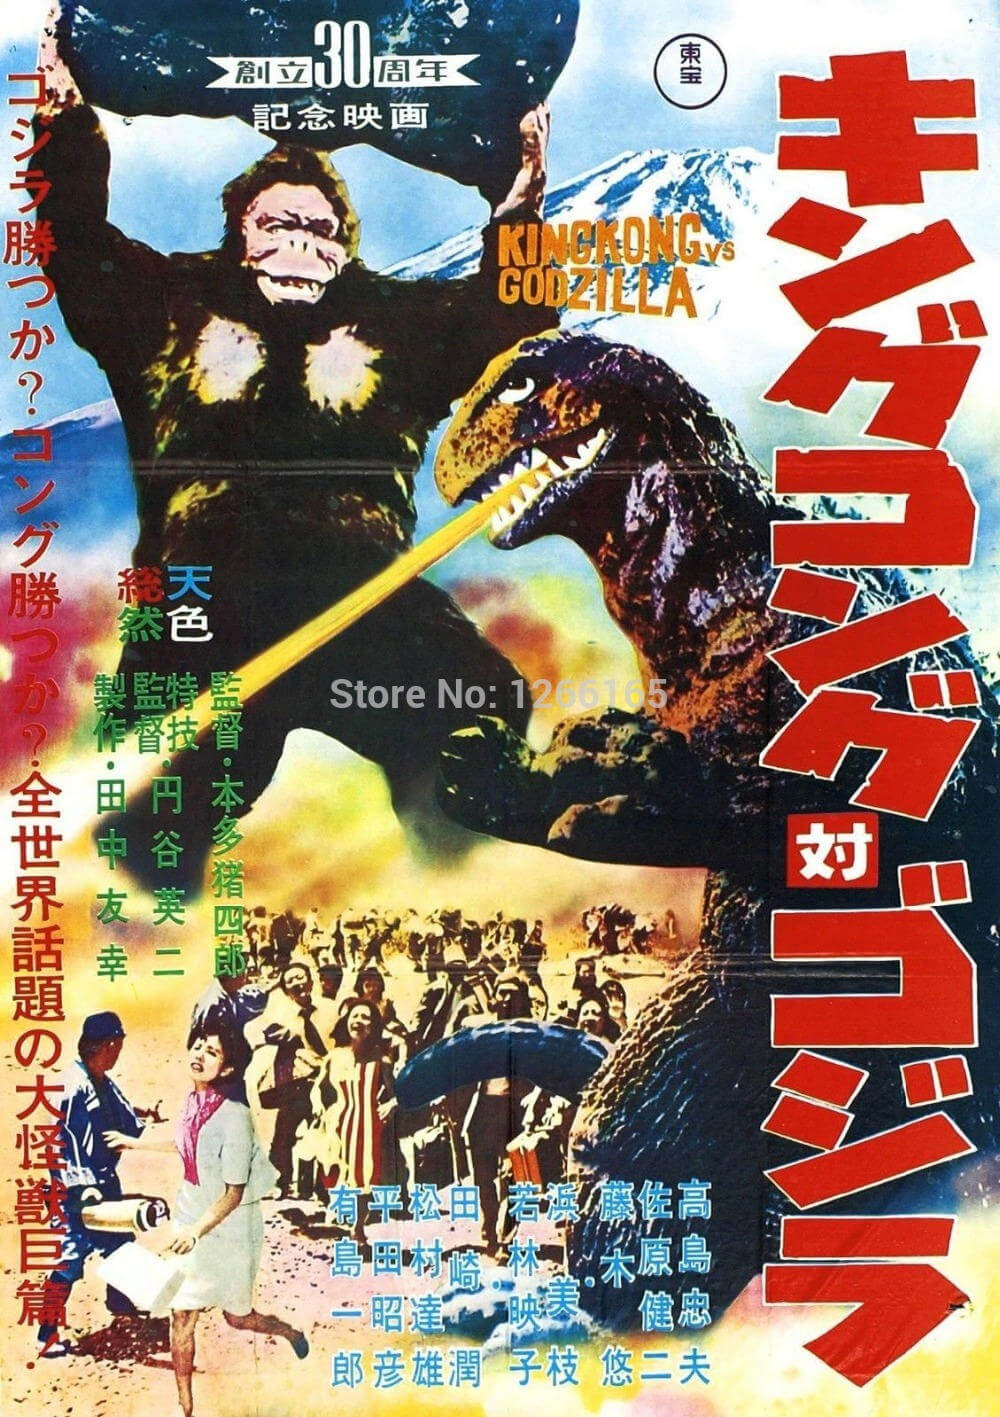 Godzilla rare awesome posterts oldskull 12